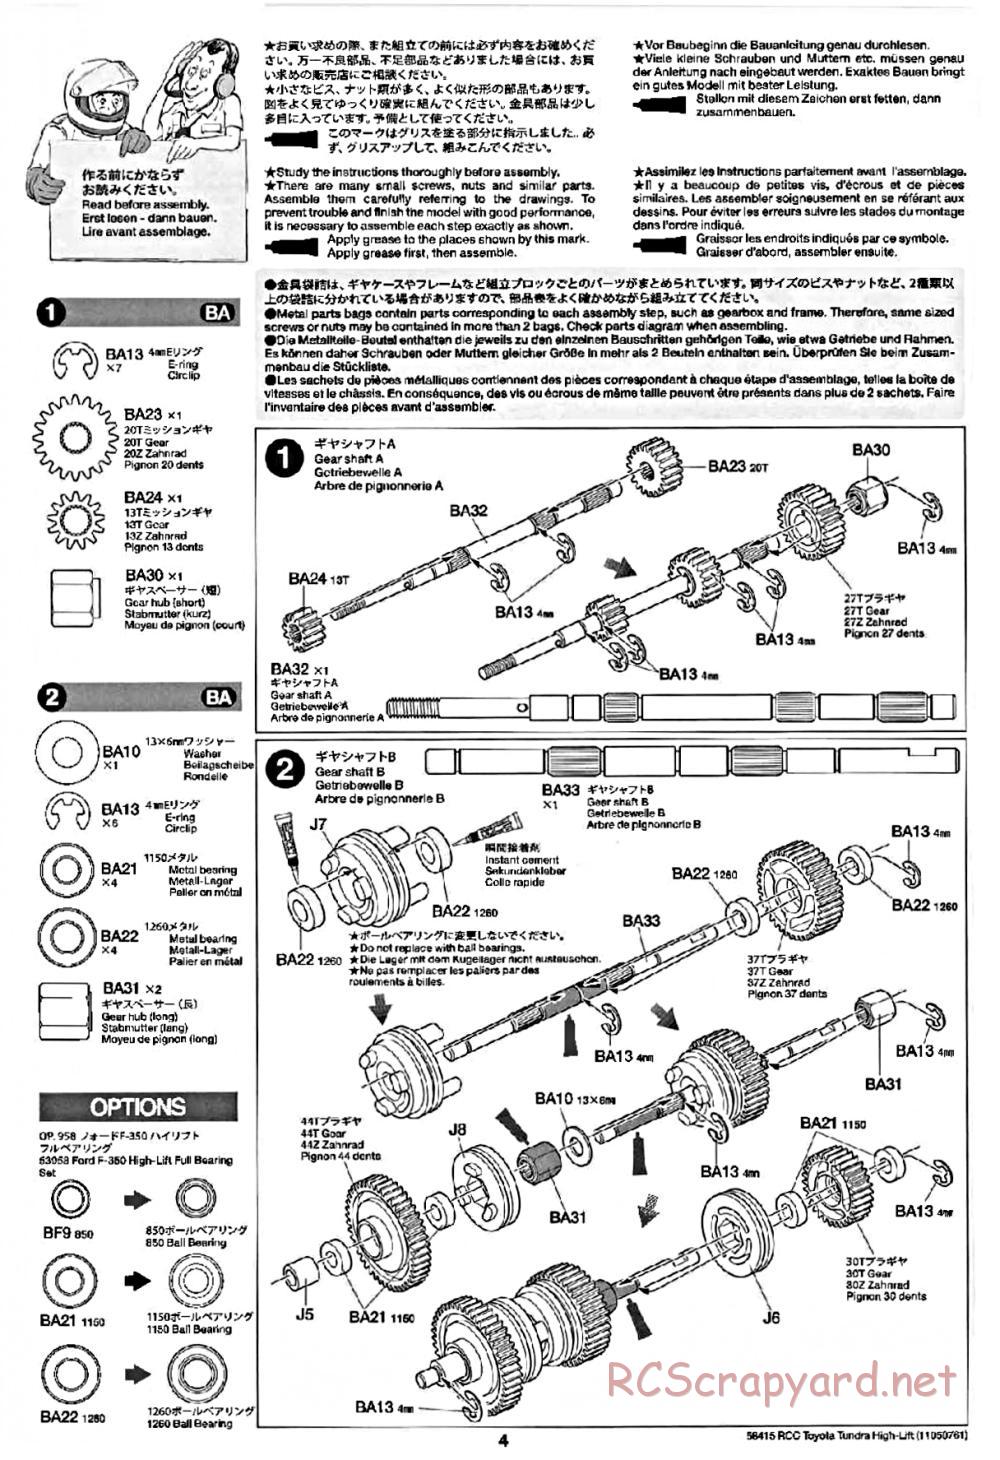 Tamiya - Toyota Tundra High-Lift Chassis - Manual - Page 4